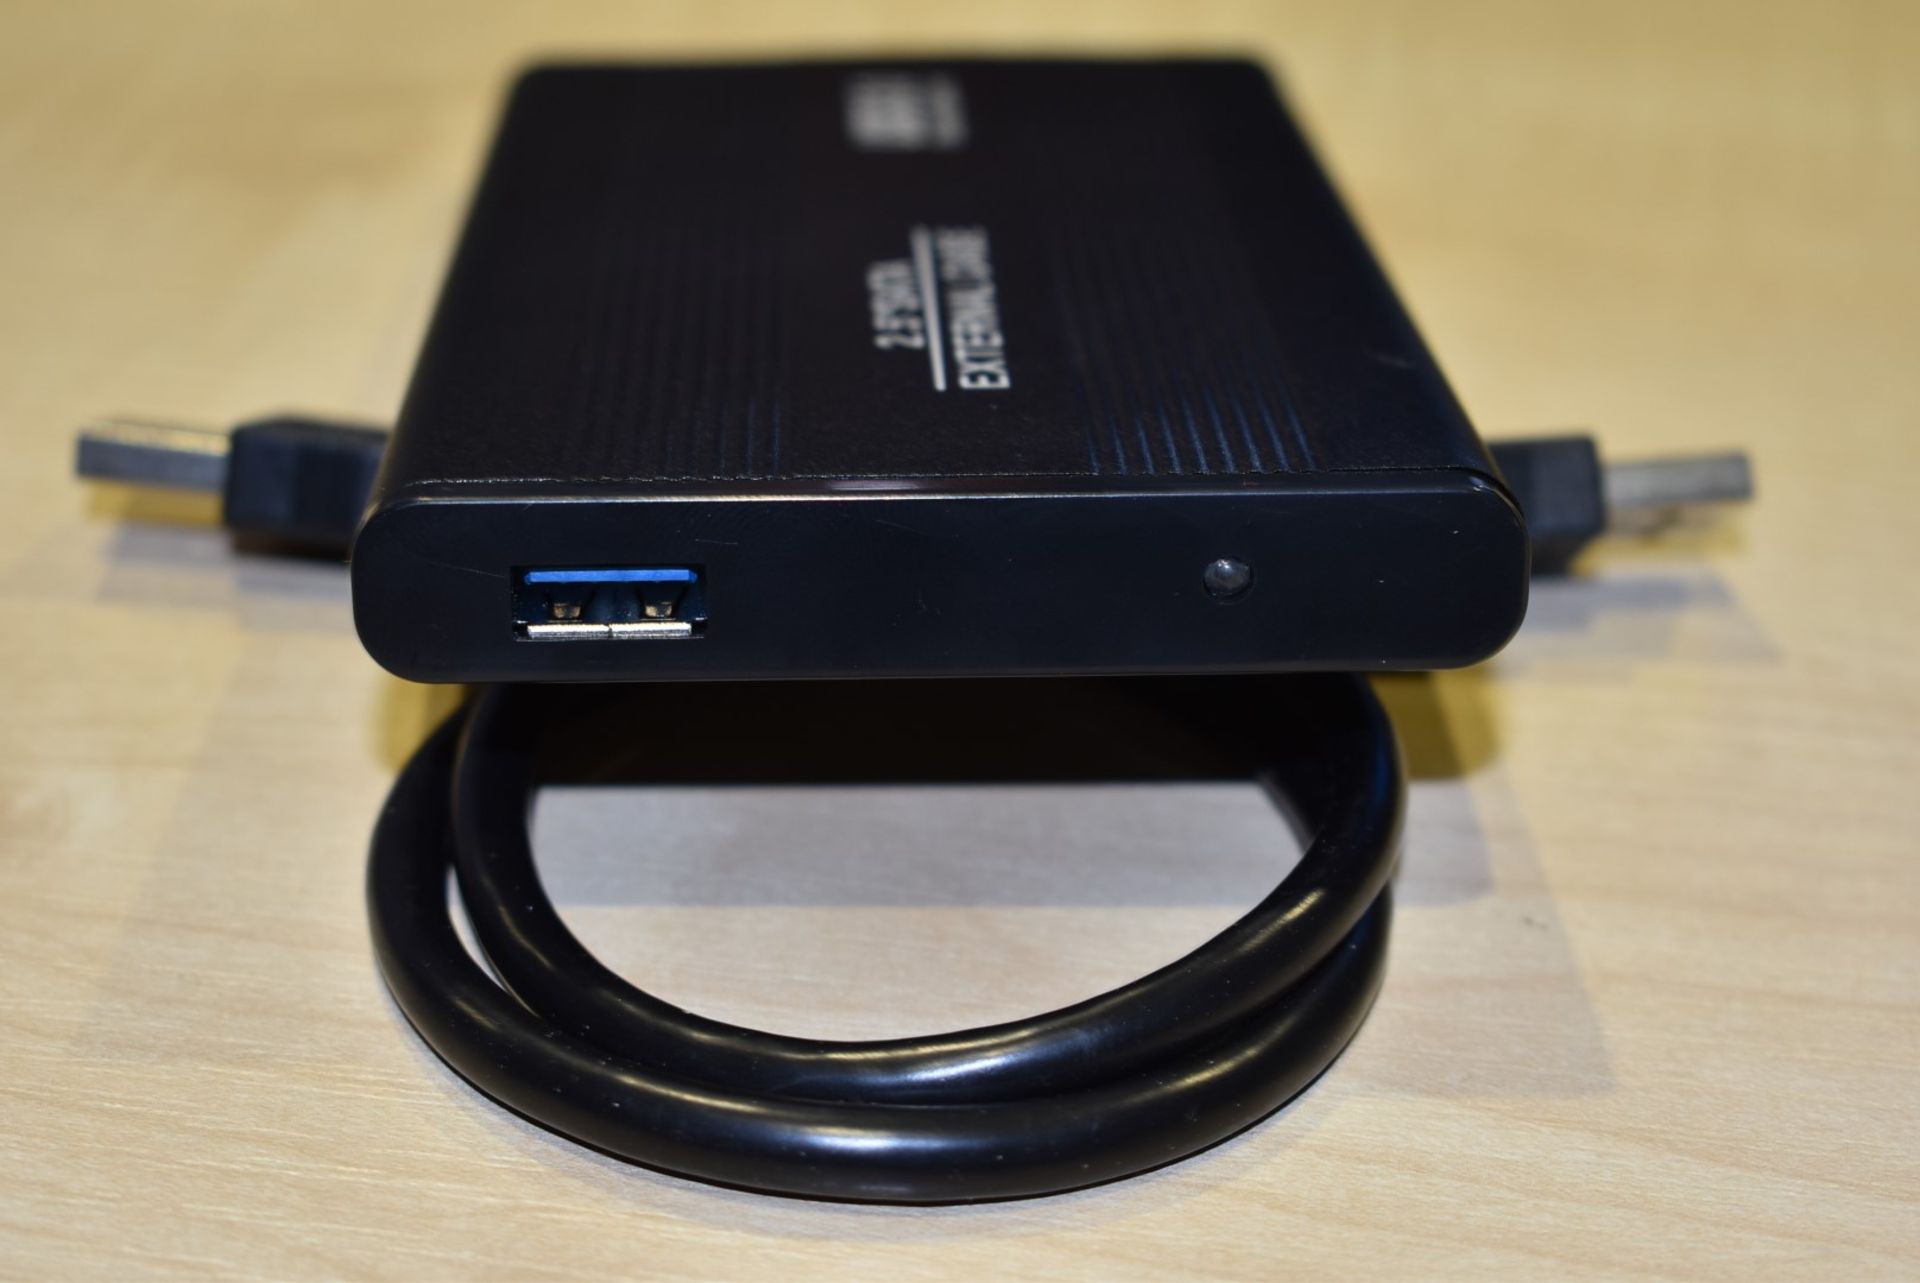 1 x External 500gb Hard Drive - Fast USB 3.0 External Drive With Aluminum Case, Carry Pouch and - Bild 2 aus 4